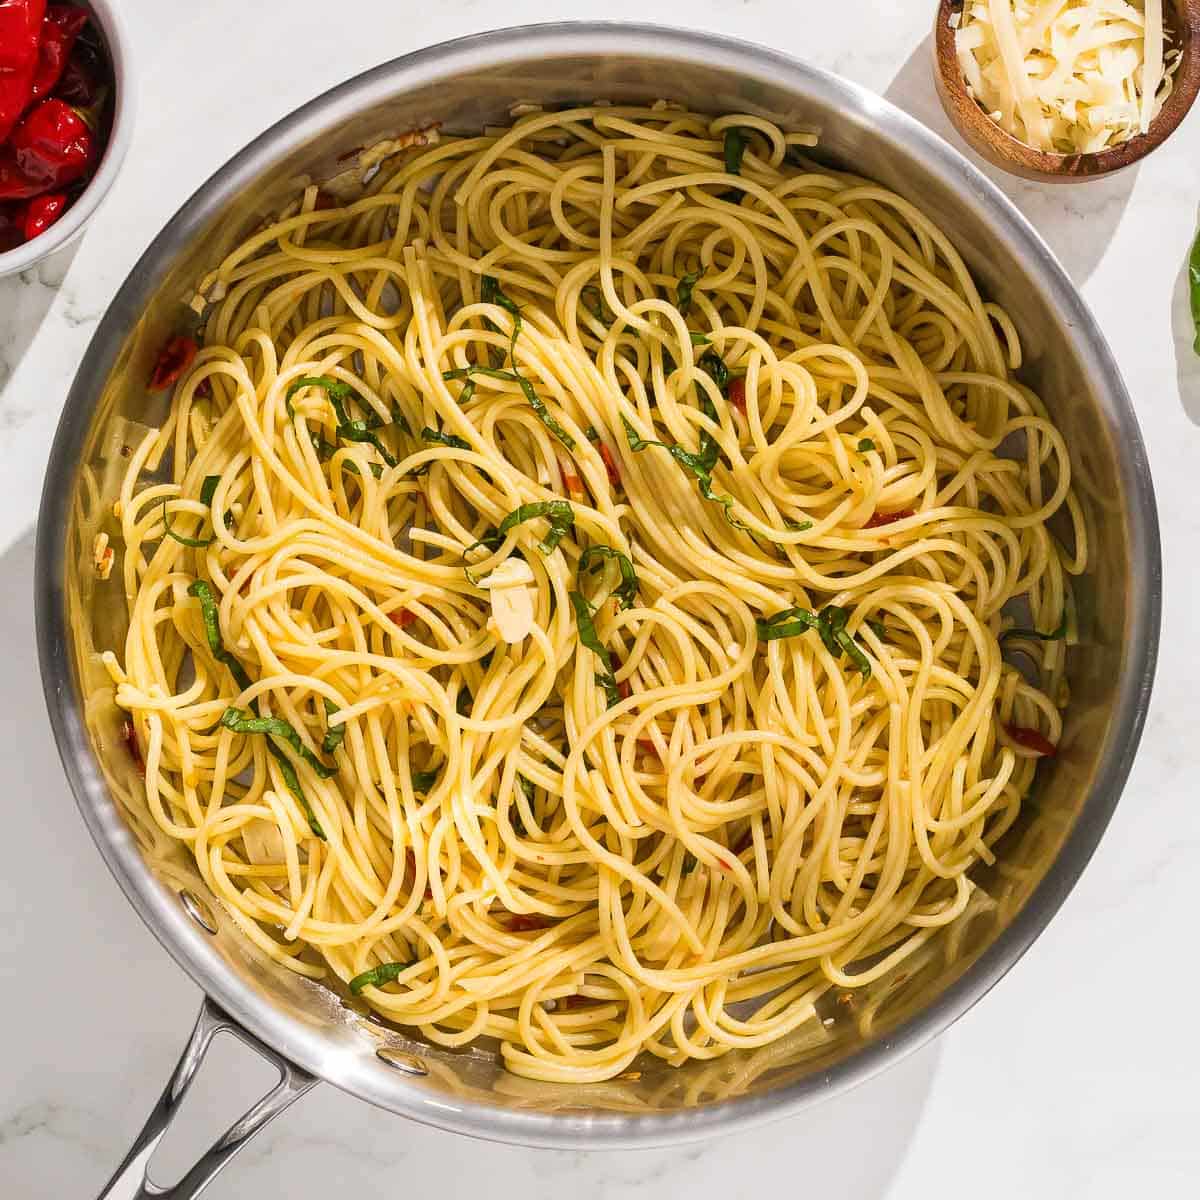 A pan of spaghetti with chilis, basil, and garlic.